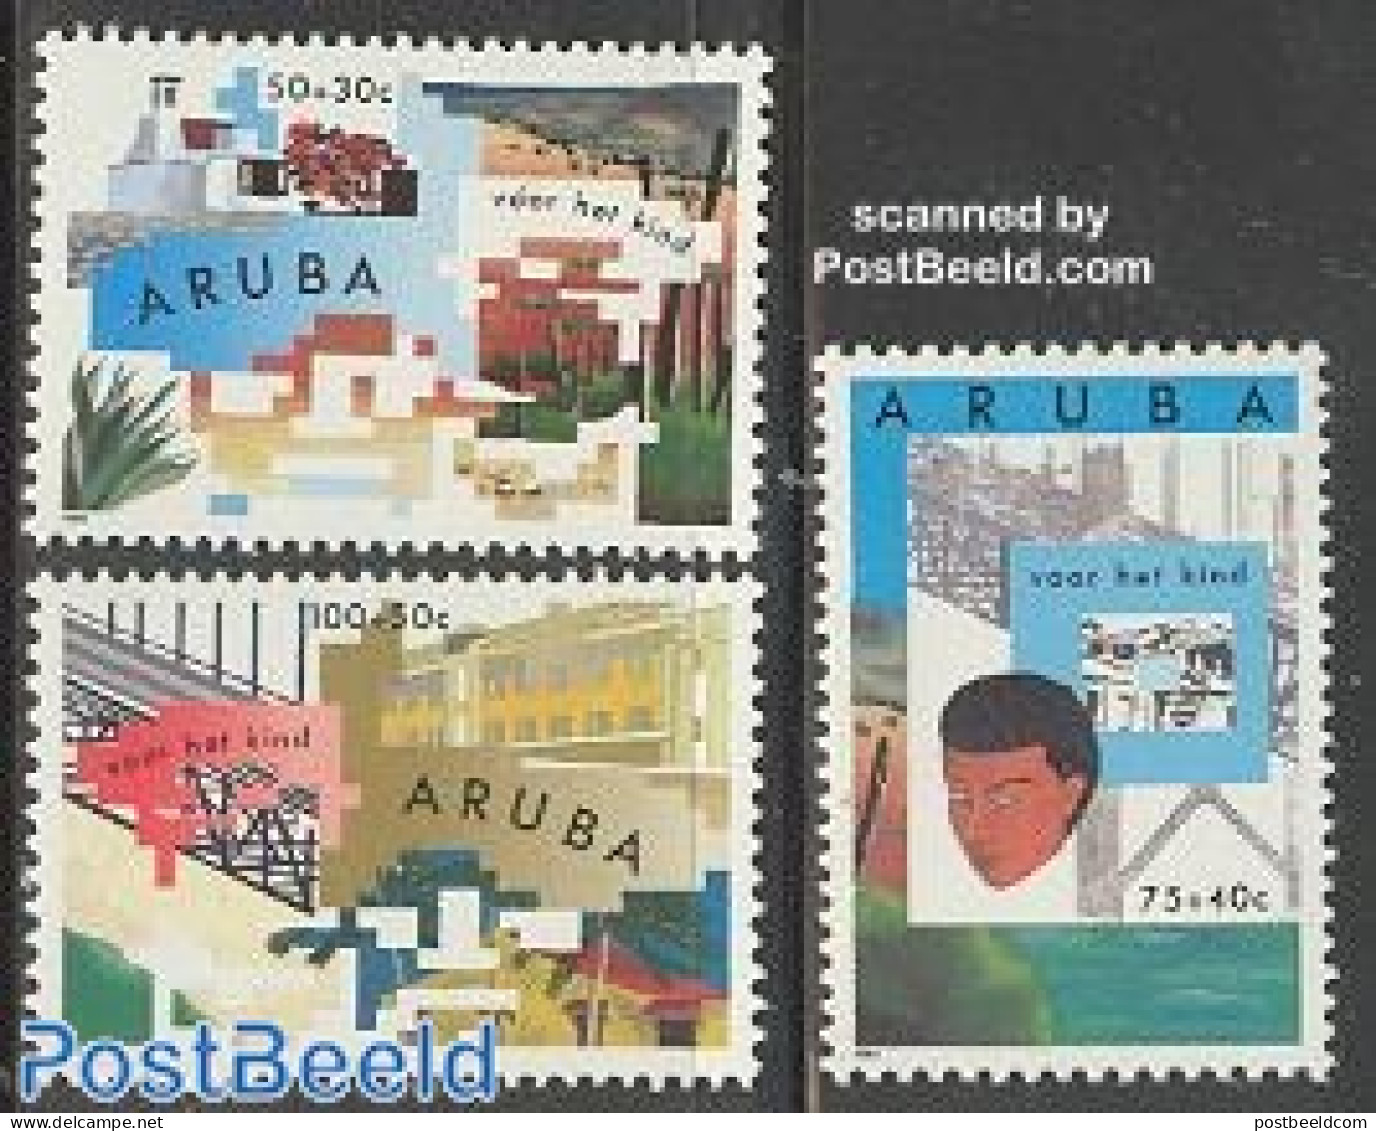 Aruba 1993 Child Welfare 3v, Mint NH, Art - Bridges And Tunnels - Ponti